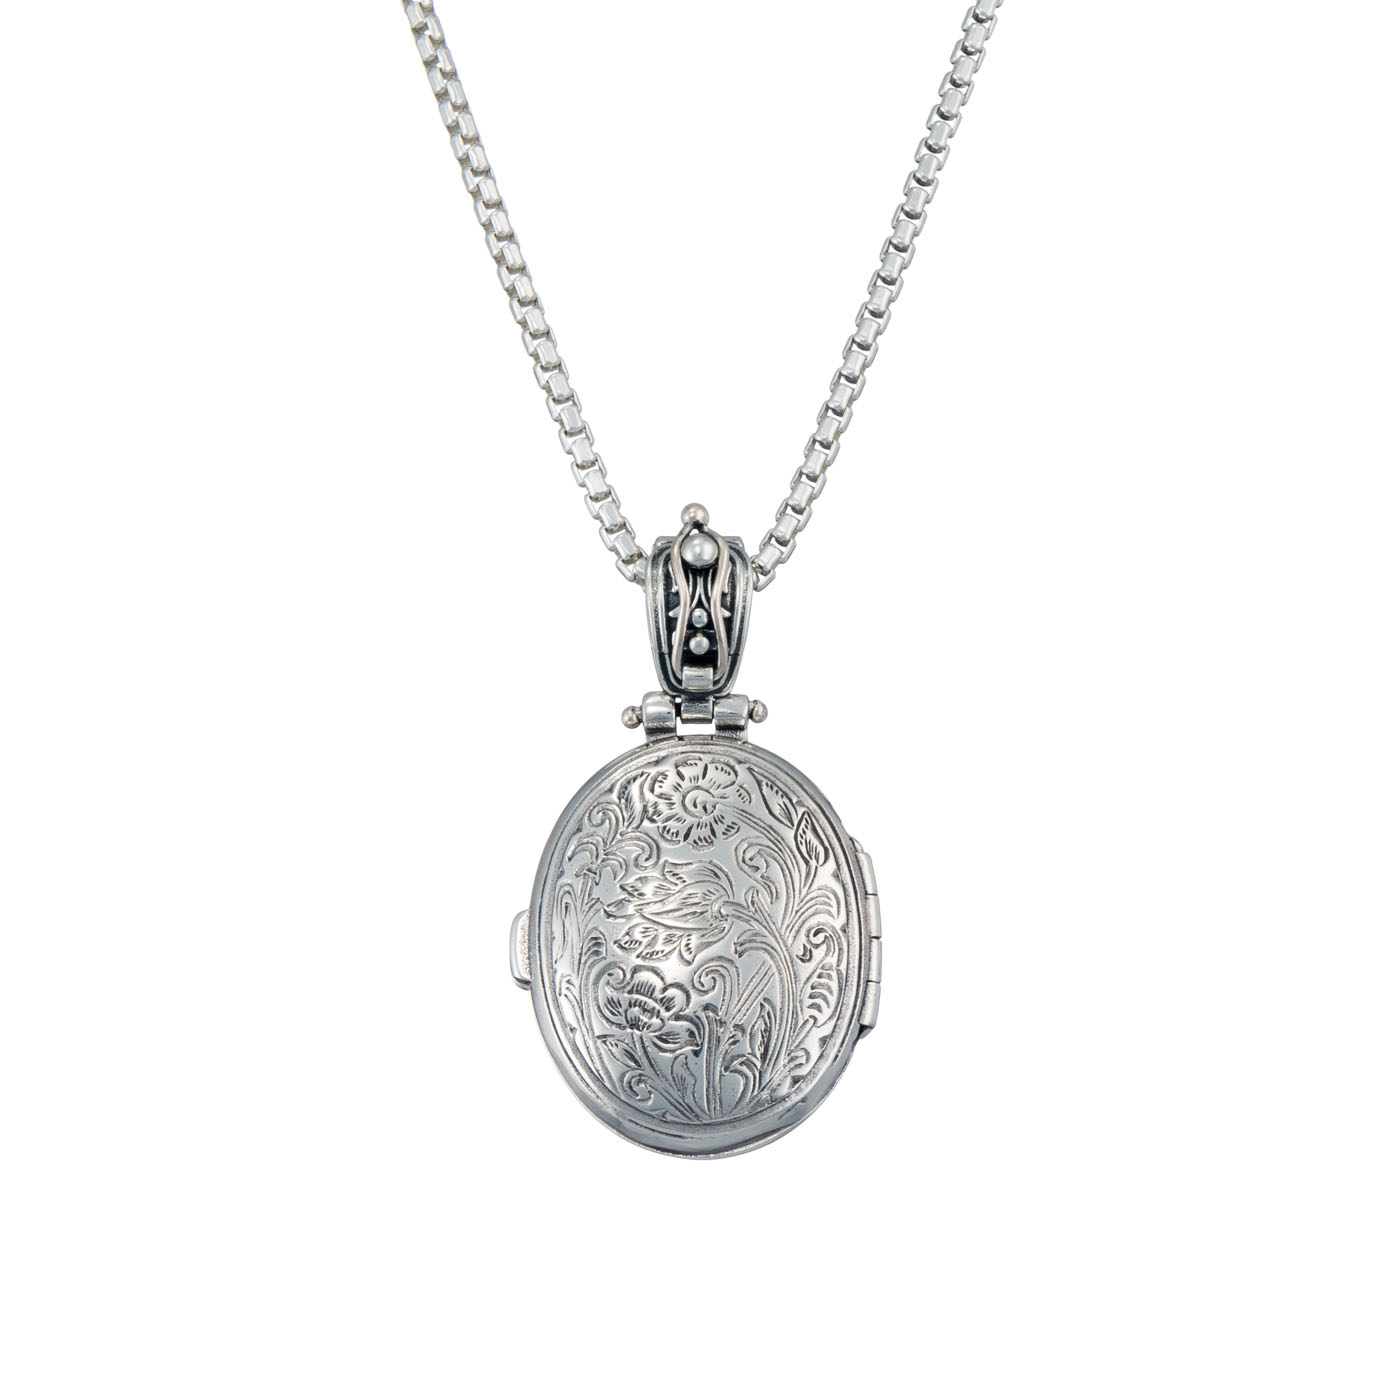 Mediterranean oval locket in Sterling silver